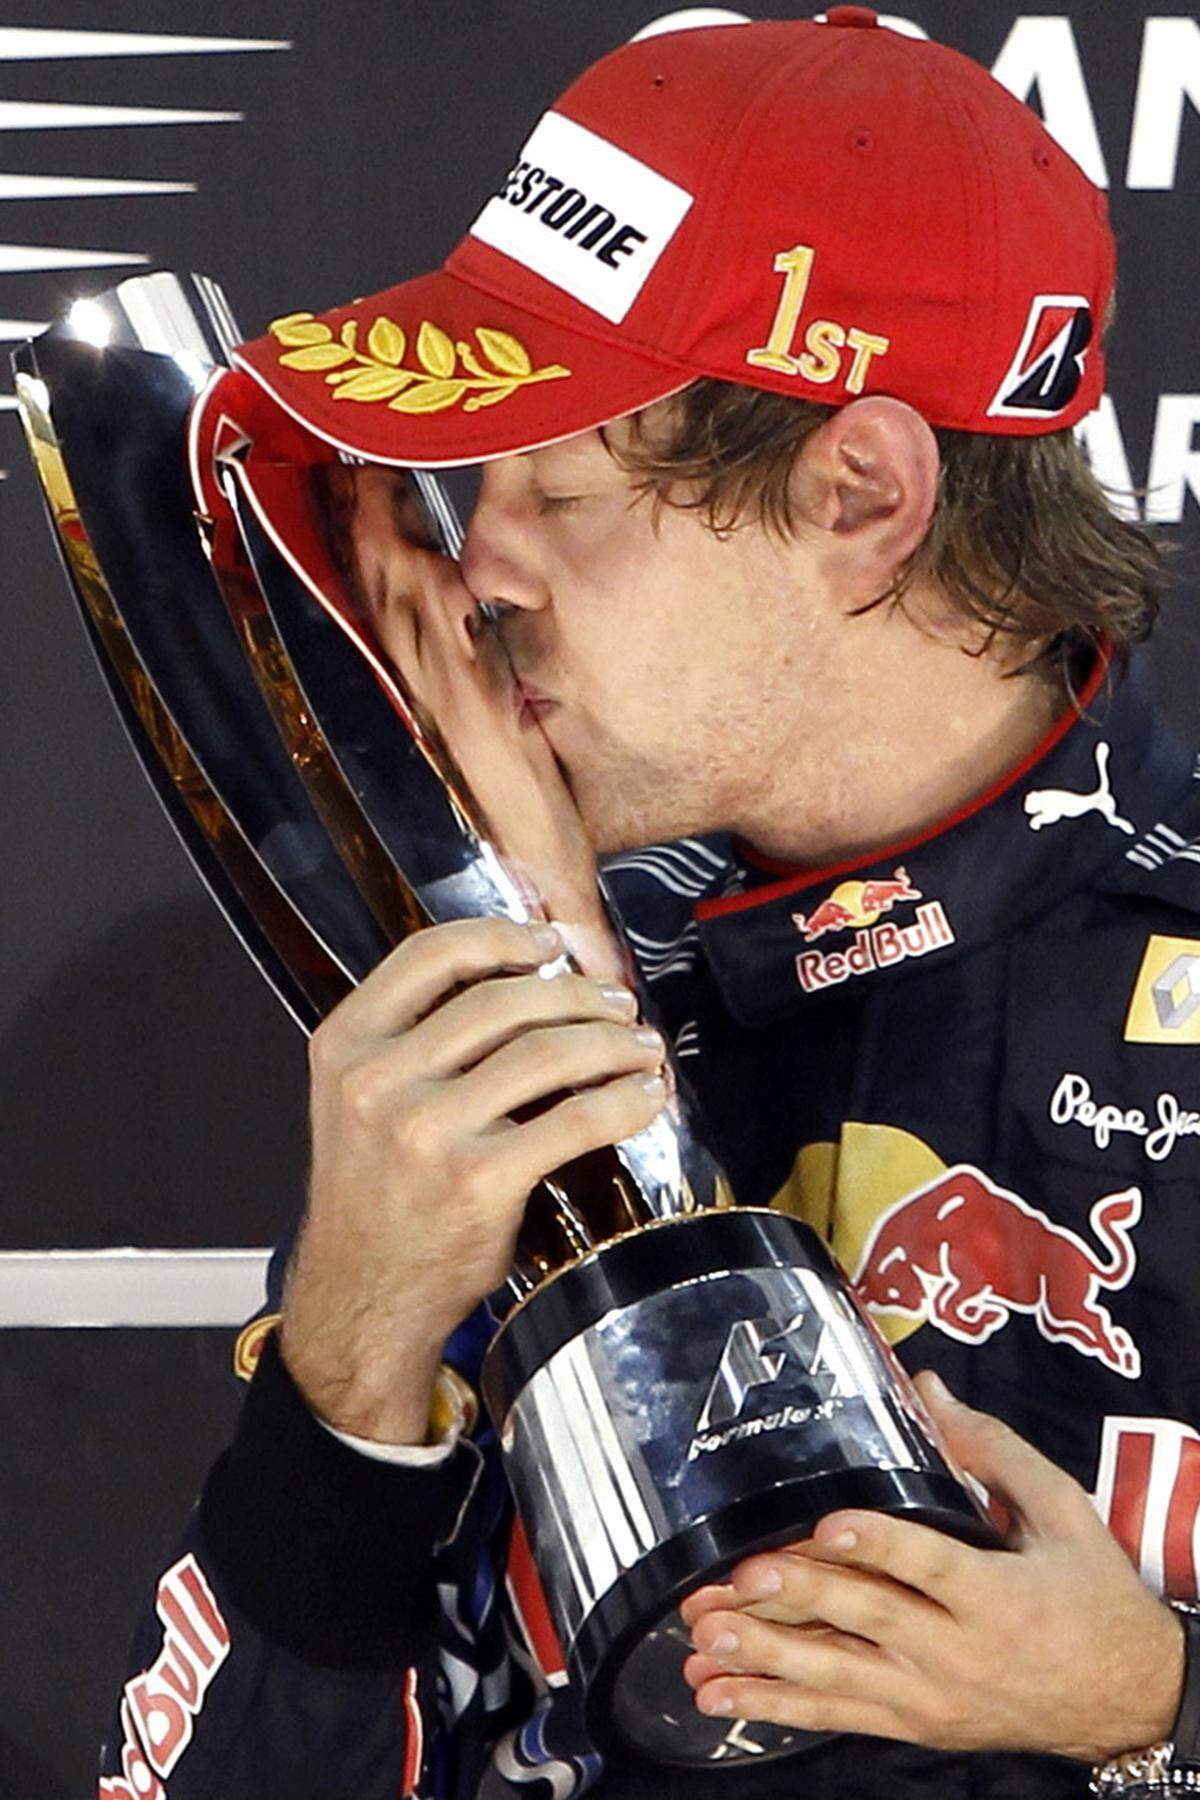 Sebastian Vettel (GER)  Geboren: 3. Juli 1987 in Heppenheim  Erster Grand Prix: 17. Juni 2007 USA  Erster GP-Sieg: 14. September 2008 Italien  GP-Starts: 62  GP-Siege: 10  Bisherige Teams: BMW-Sauber (2007), Toro Rosso (2007-2008)  Größter Erfolg: Weltmeister 2010